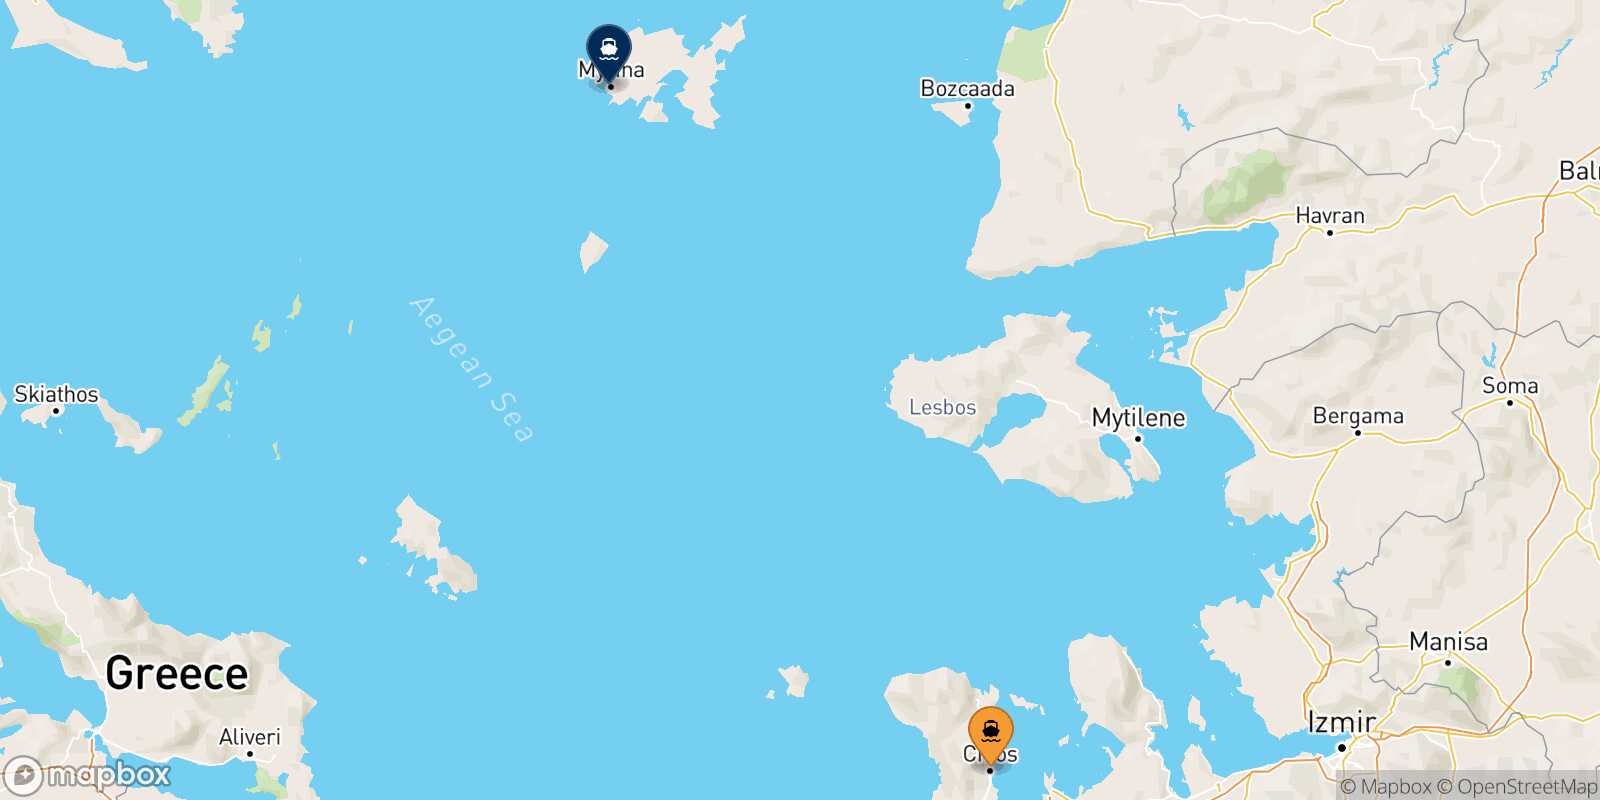 Mesta Chios Myrina (Limnos) route map